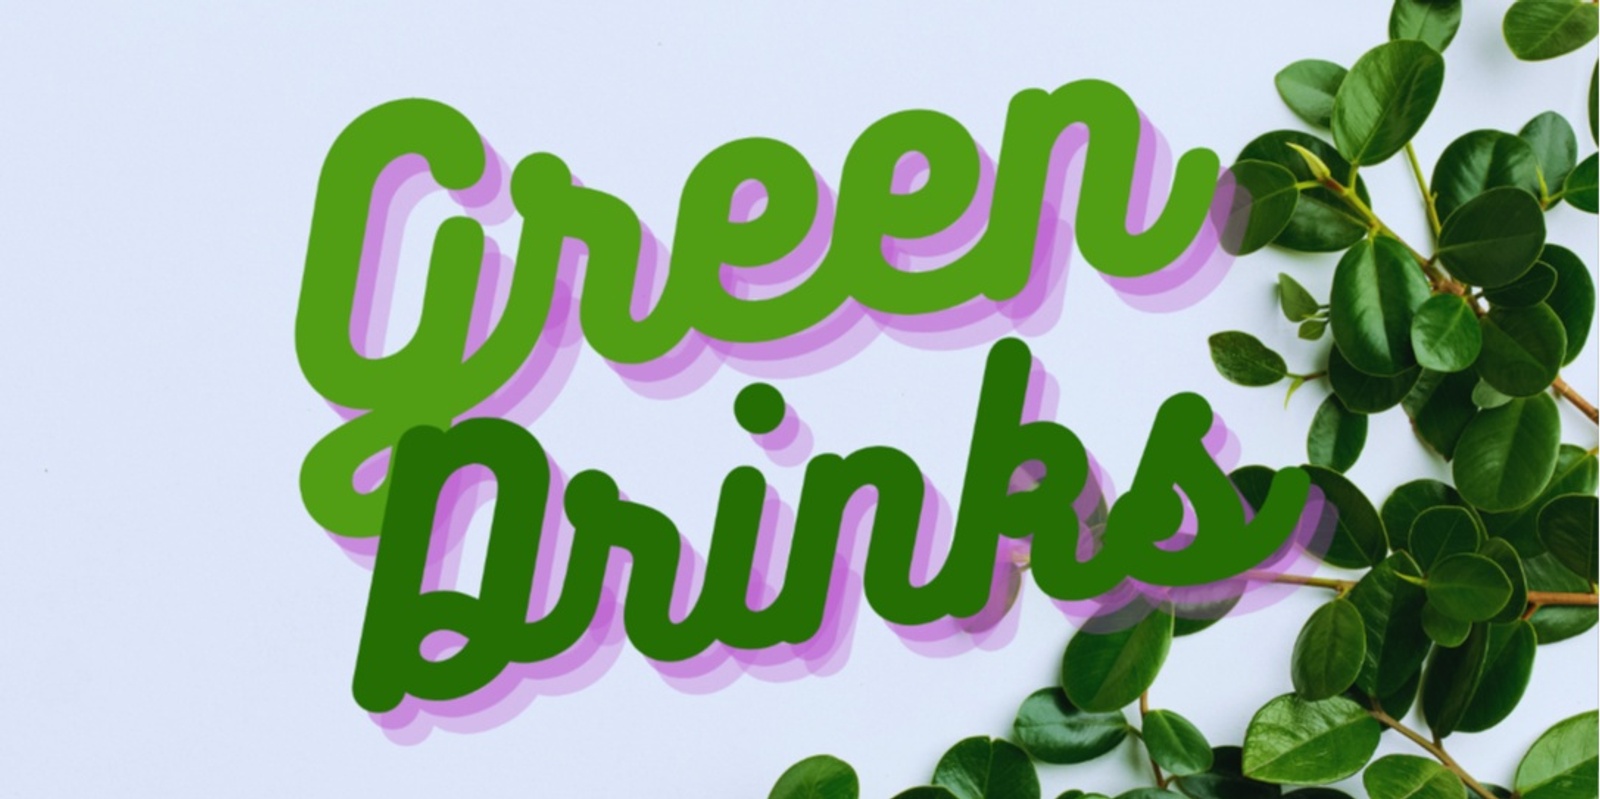 Banner image for Auckland Green Drinks - Ngahuru/Autumn Edition